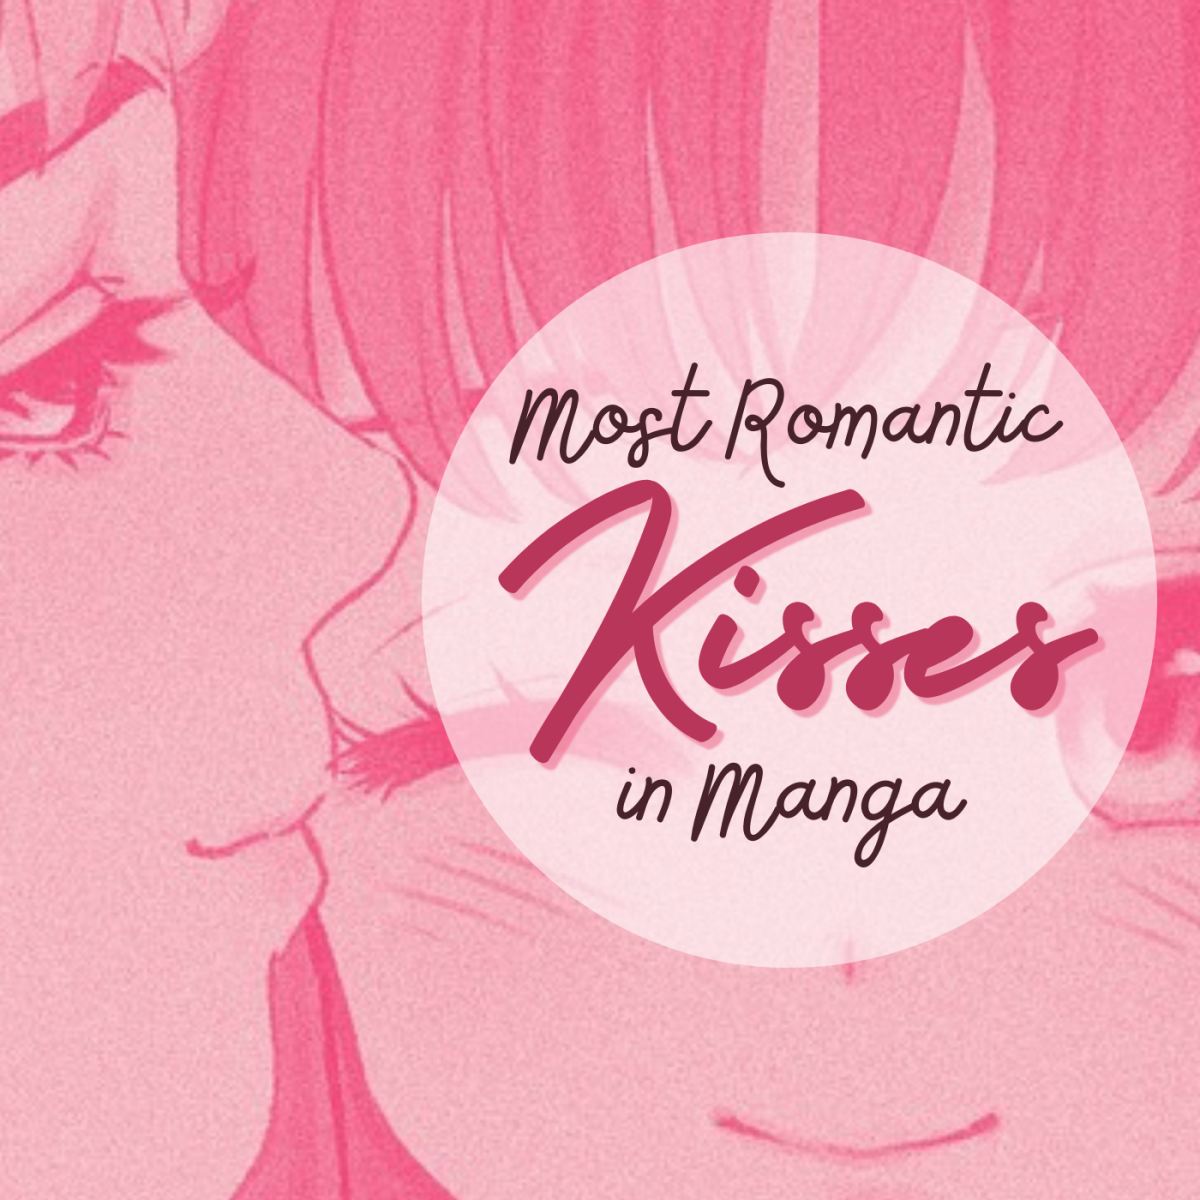 9 Most Romantic Kissing Scenes in Manga